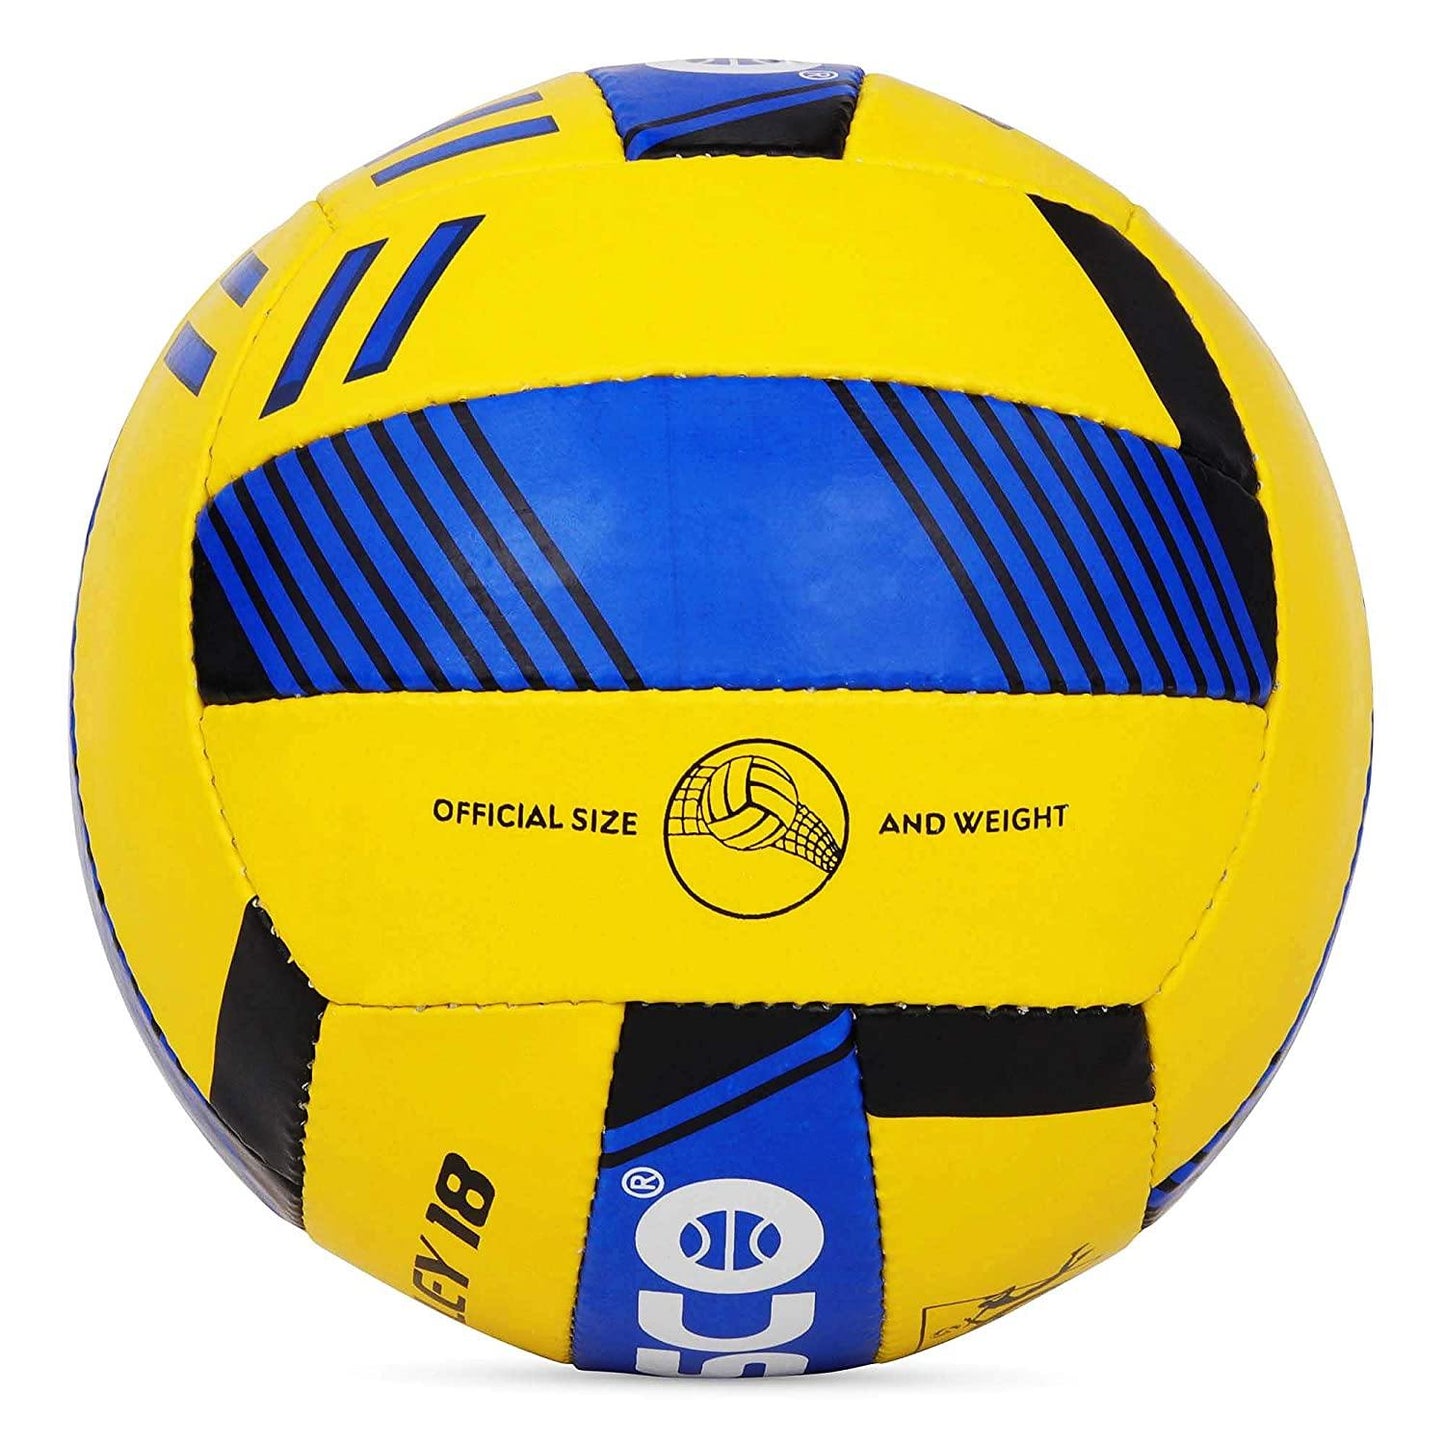 Cosco Volley 18 Volley Ball, Size 4 - Best Price online Prokicksports.com